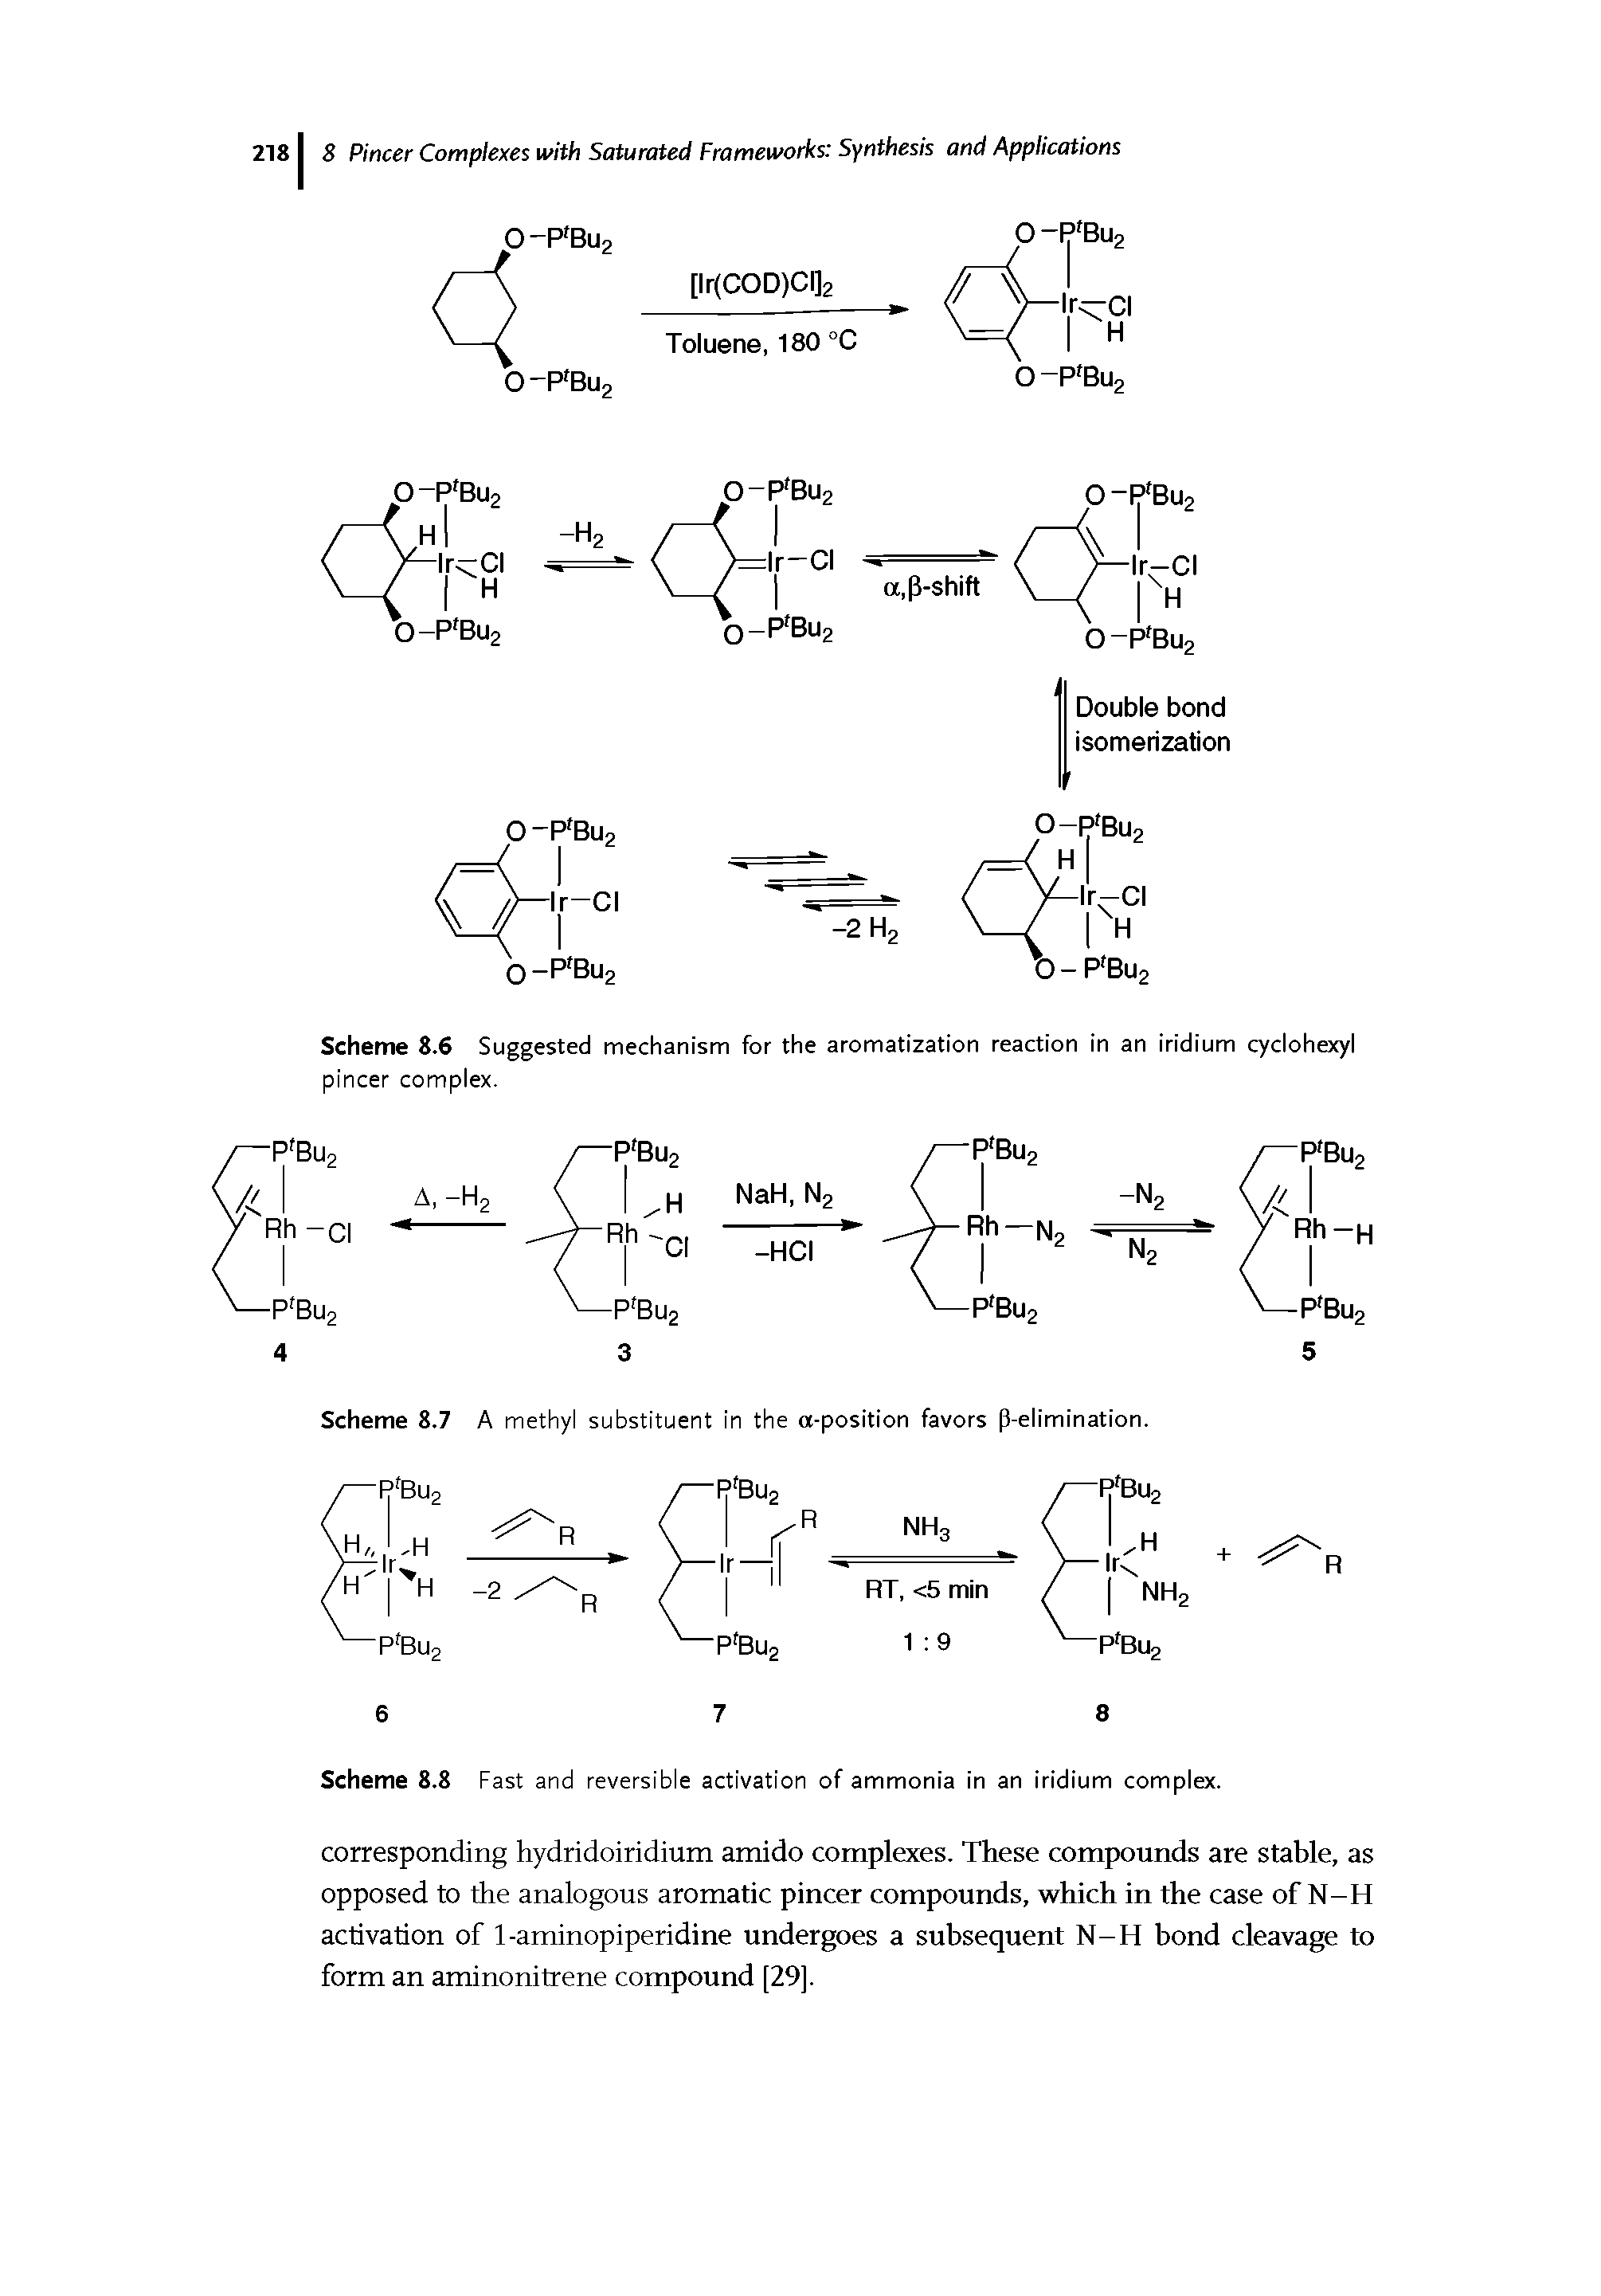 Scheme 8.6 Suggested mechanism for the aromatization reaction in an iridium pincer complex.